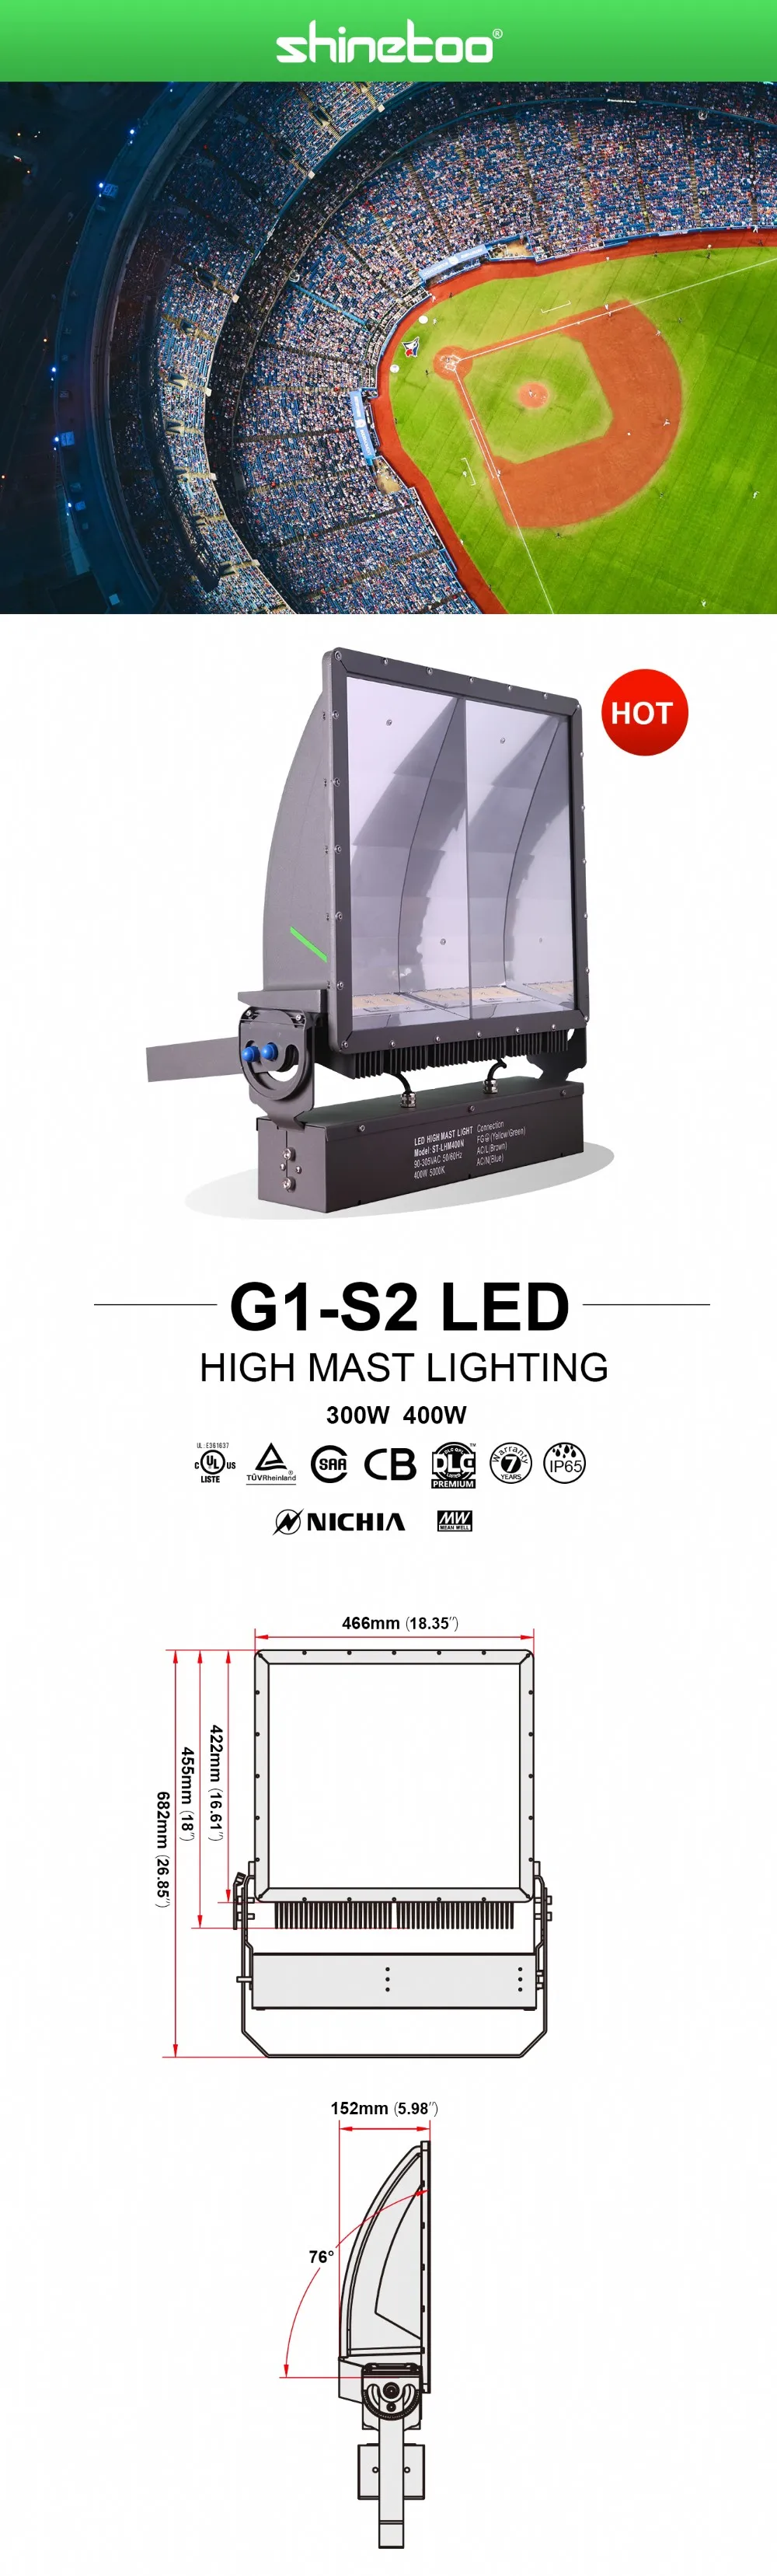 G1-S2 LED High Mast FloodLighting